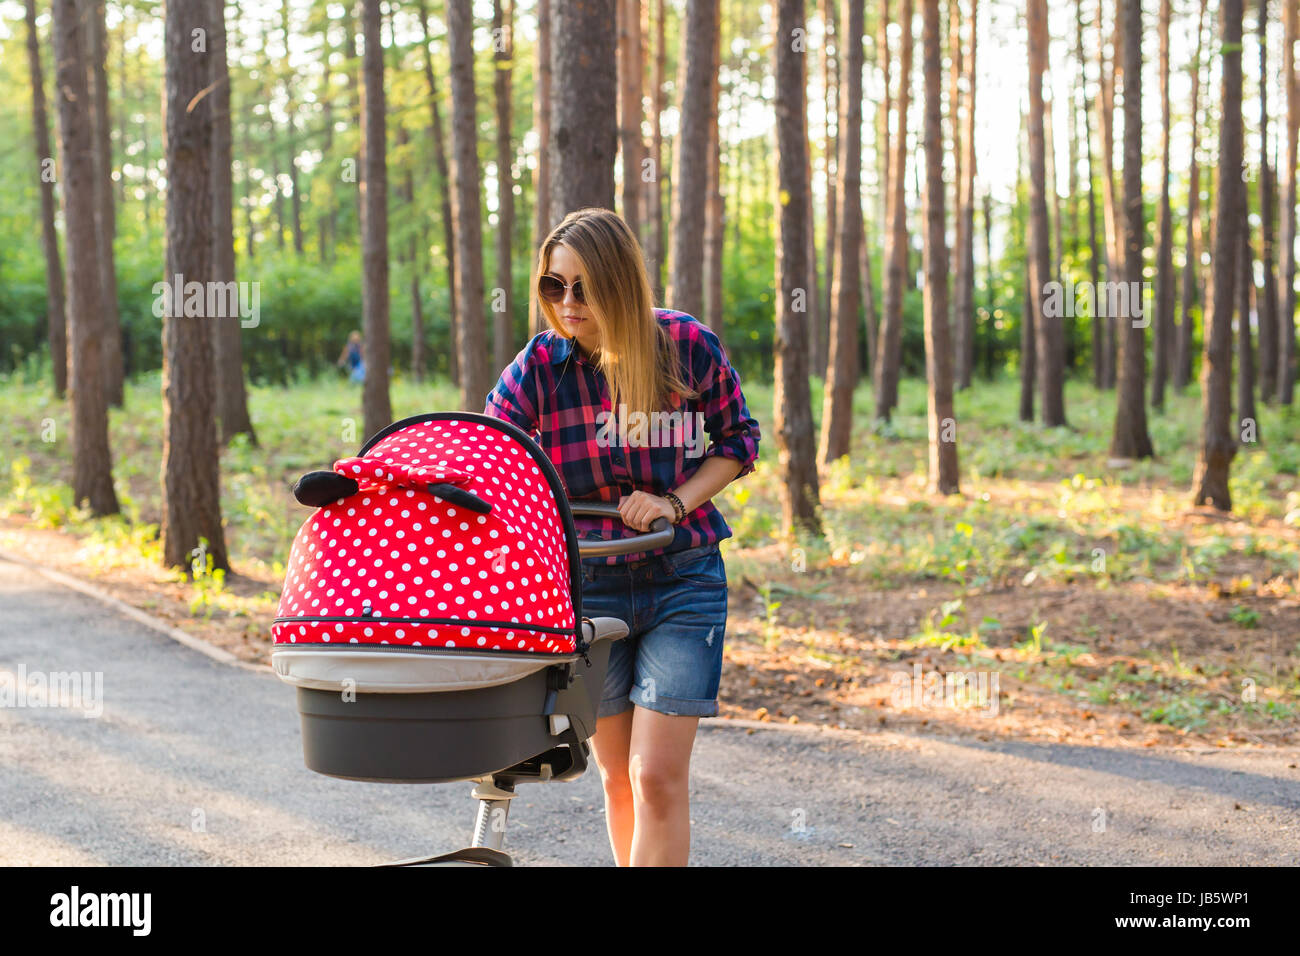 walking newborn in stroller